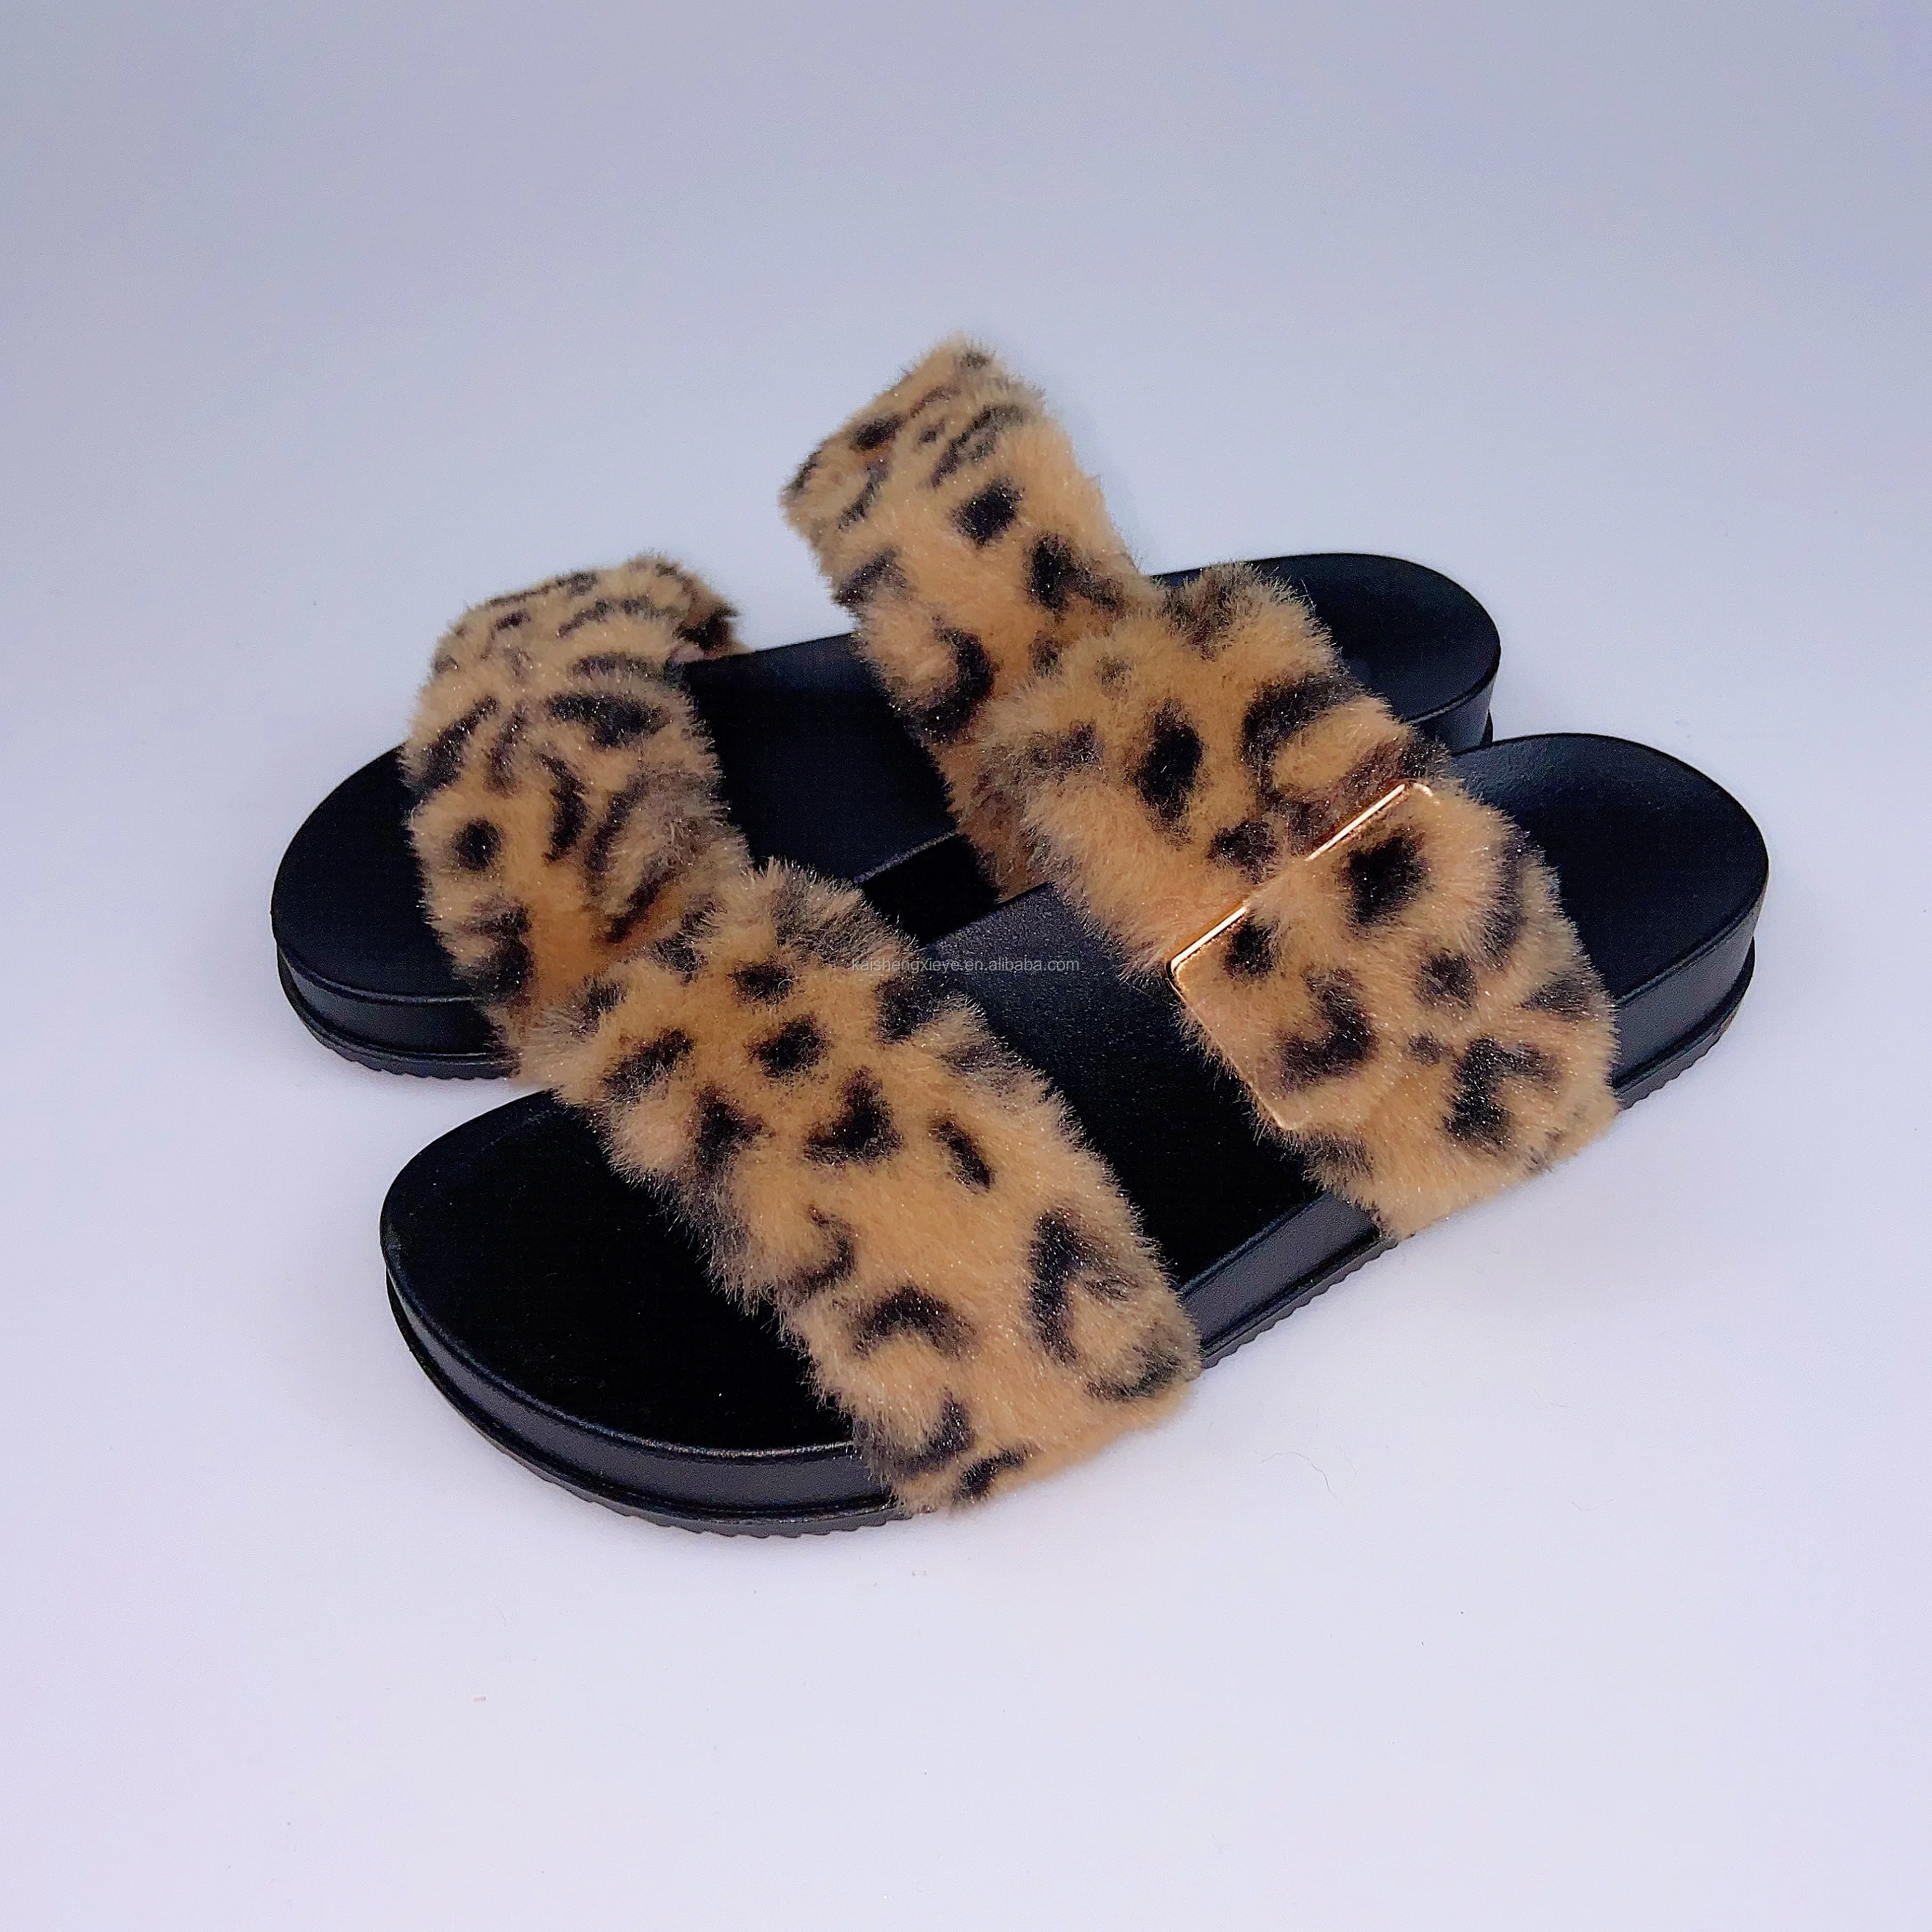 Women Comfy Slippers Open Toe Leopard Print Flats Winter Shoes Fluffy Indoor US